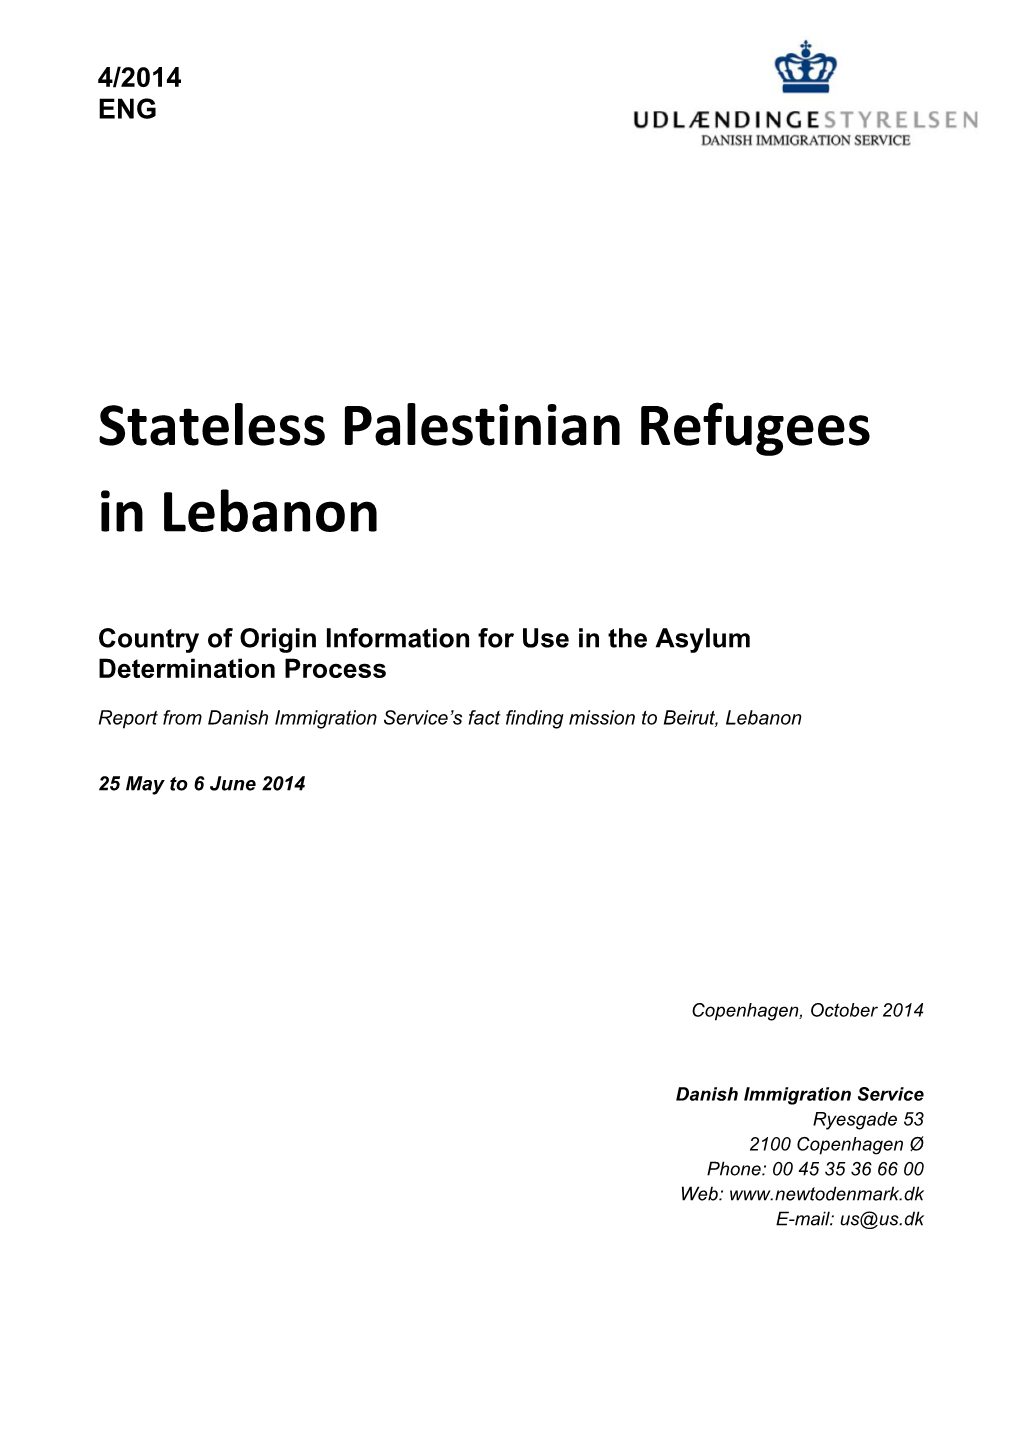 Stateless Palestinian Refugees in Lebanon